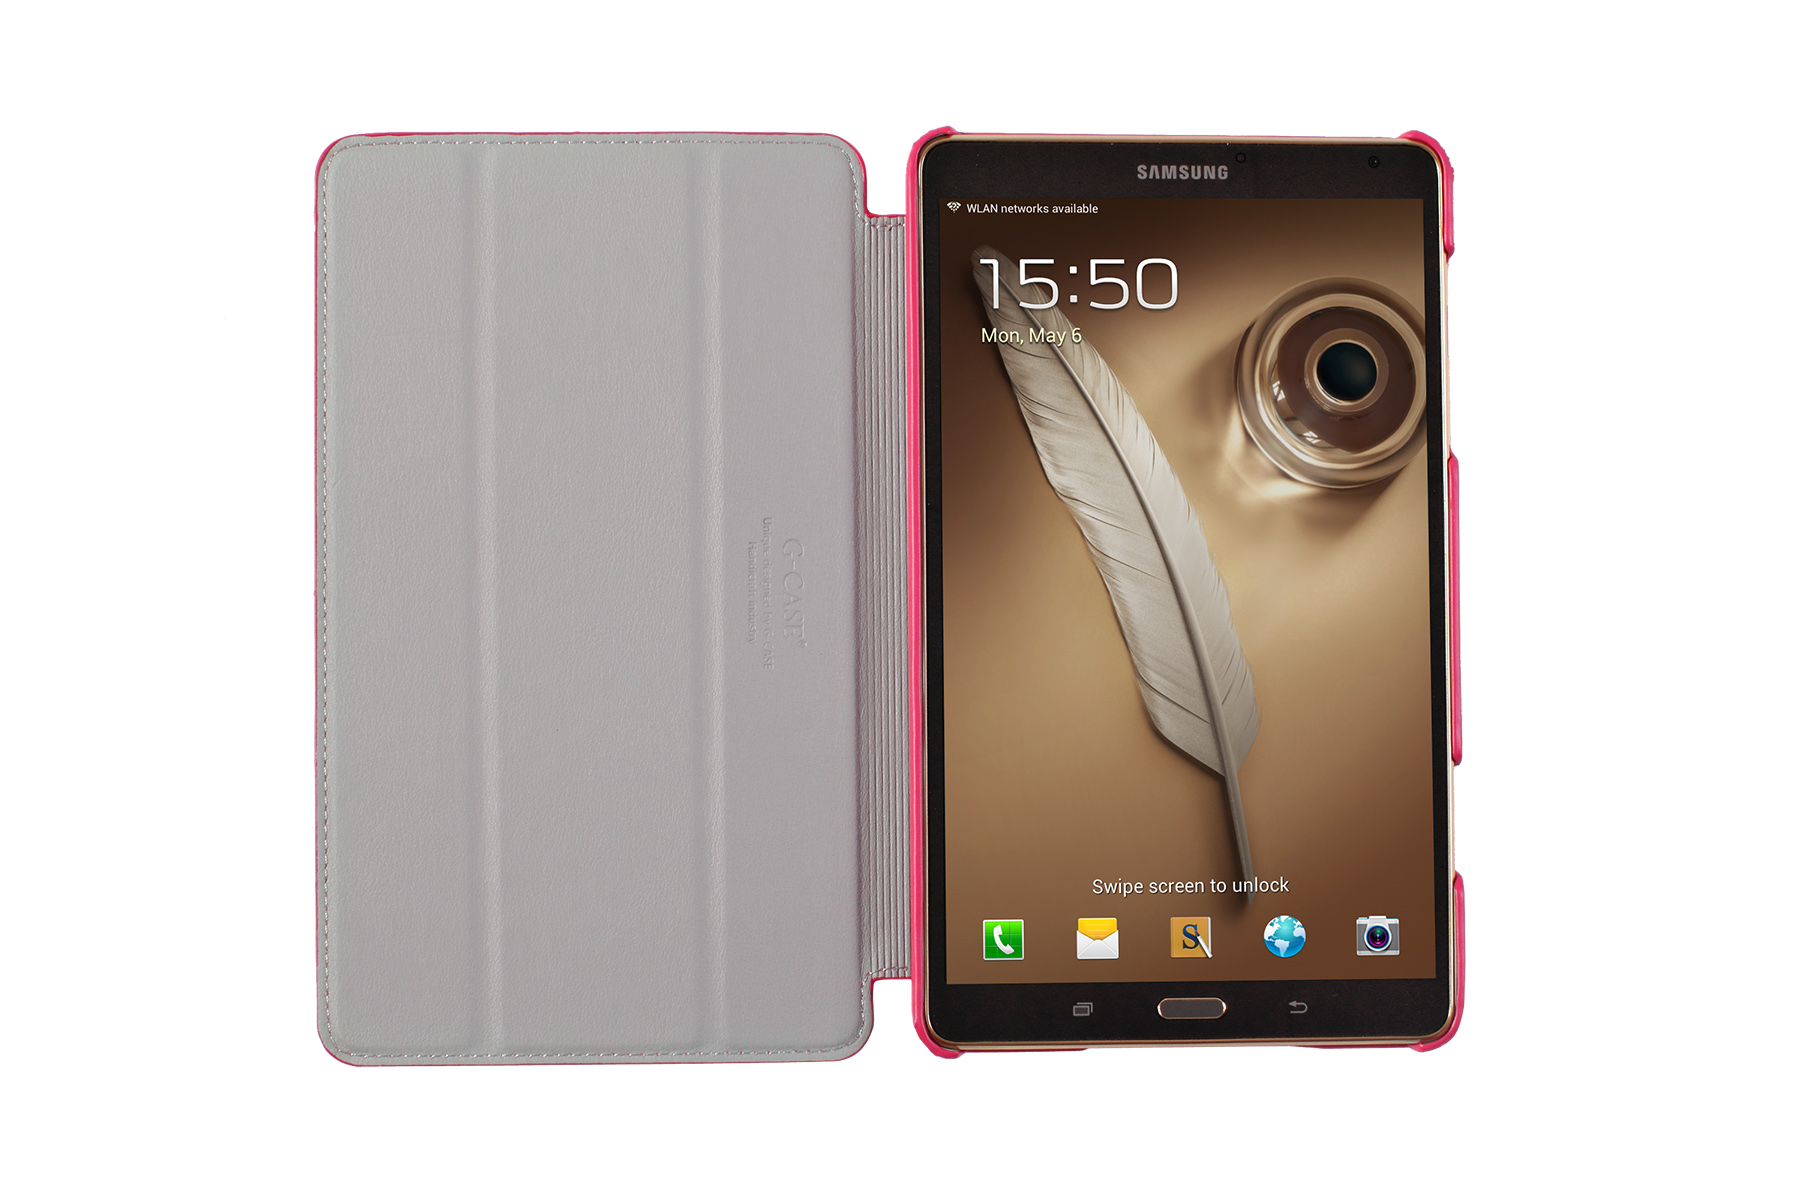 Чехол-книжка G-Case Slim Premium для Samsung Galaxy Tab S 8.4 Pink